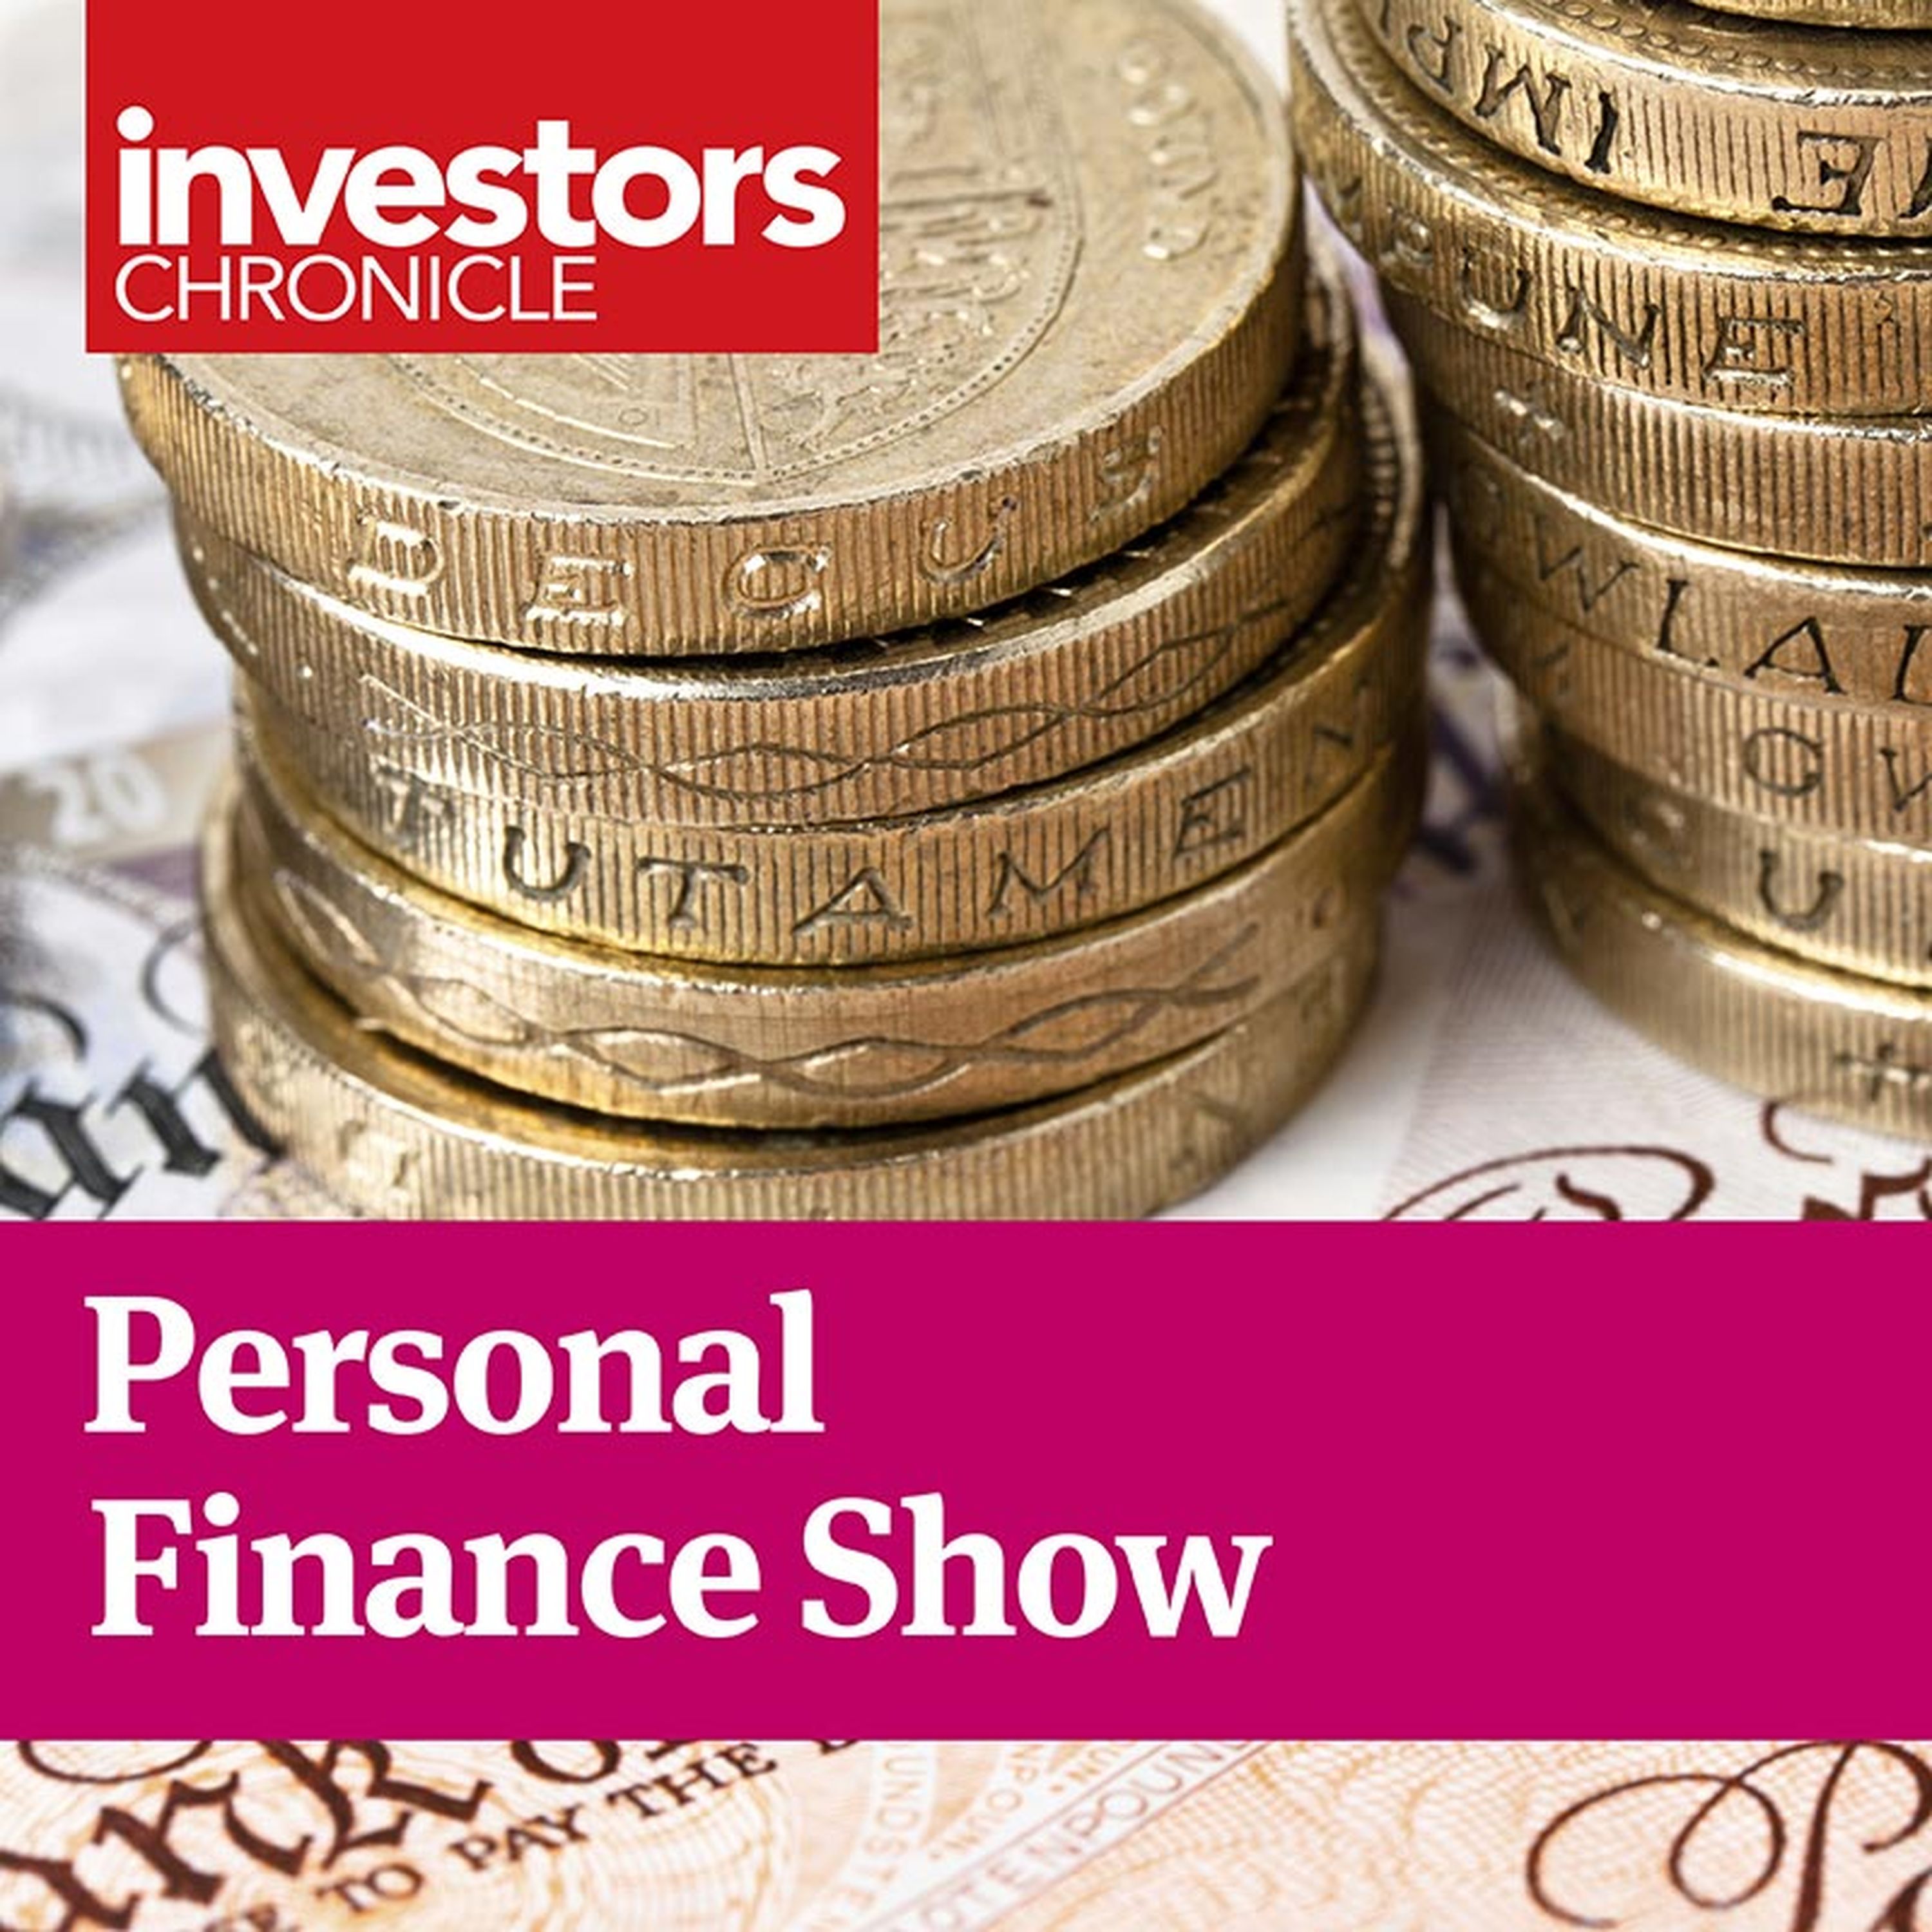 Personal Finance Show: Managing your portfolio through volatility